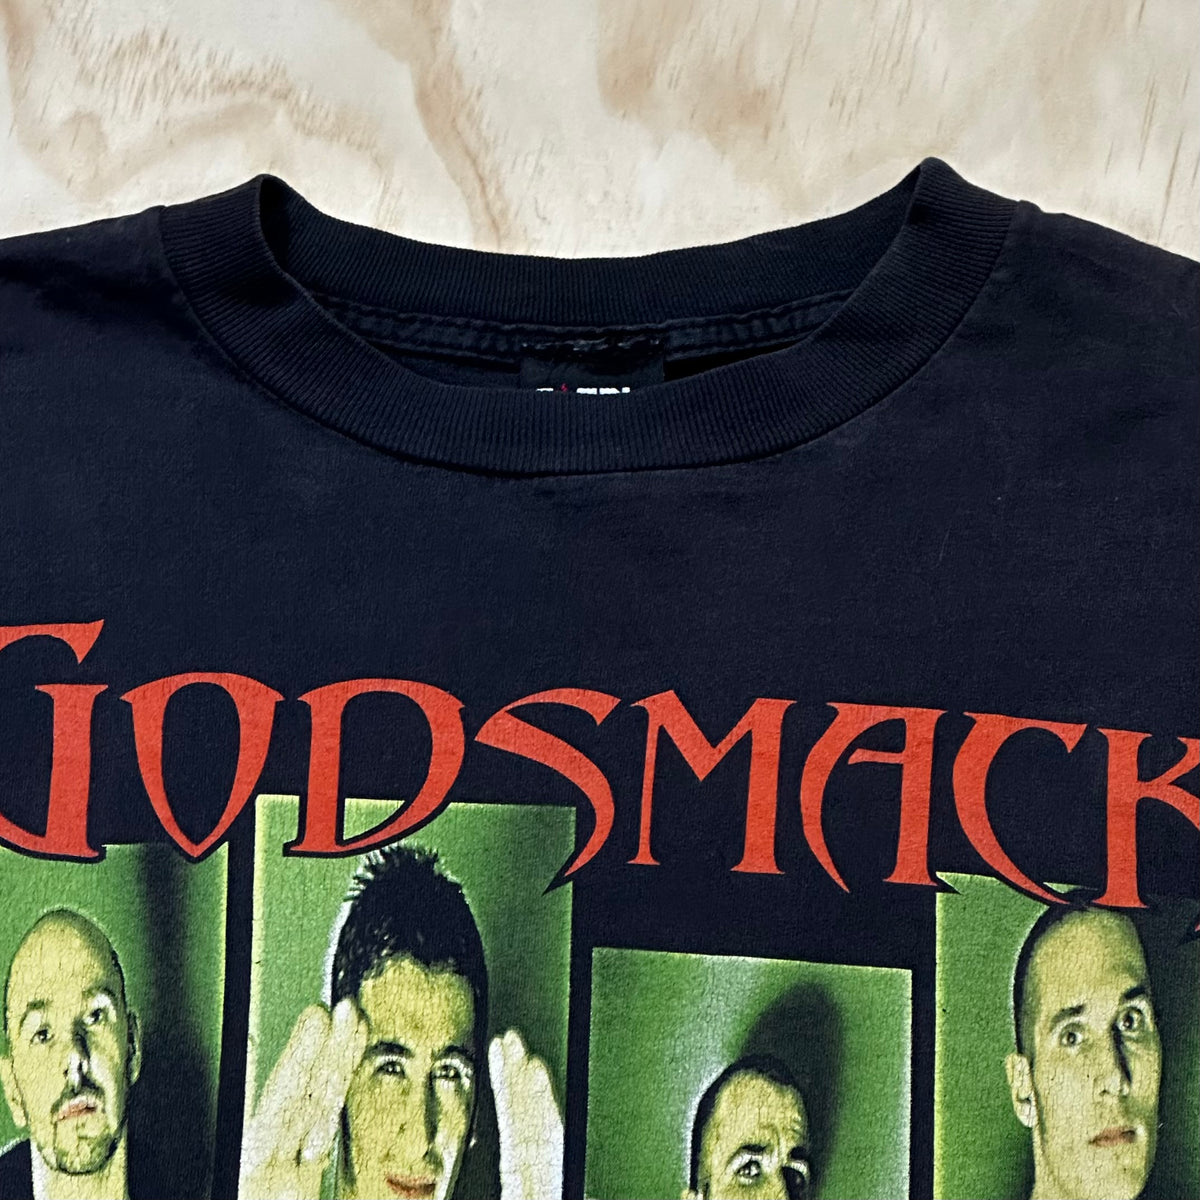 Vintage 90s Godsmack voodoo tour t-shirt